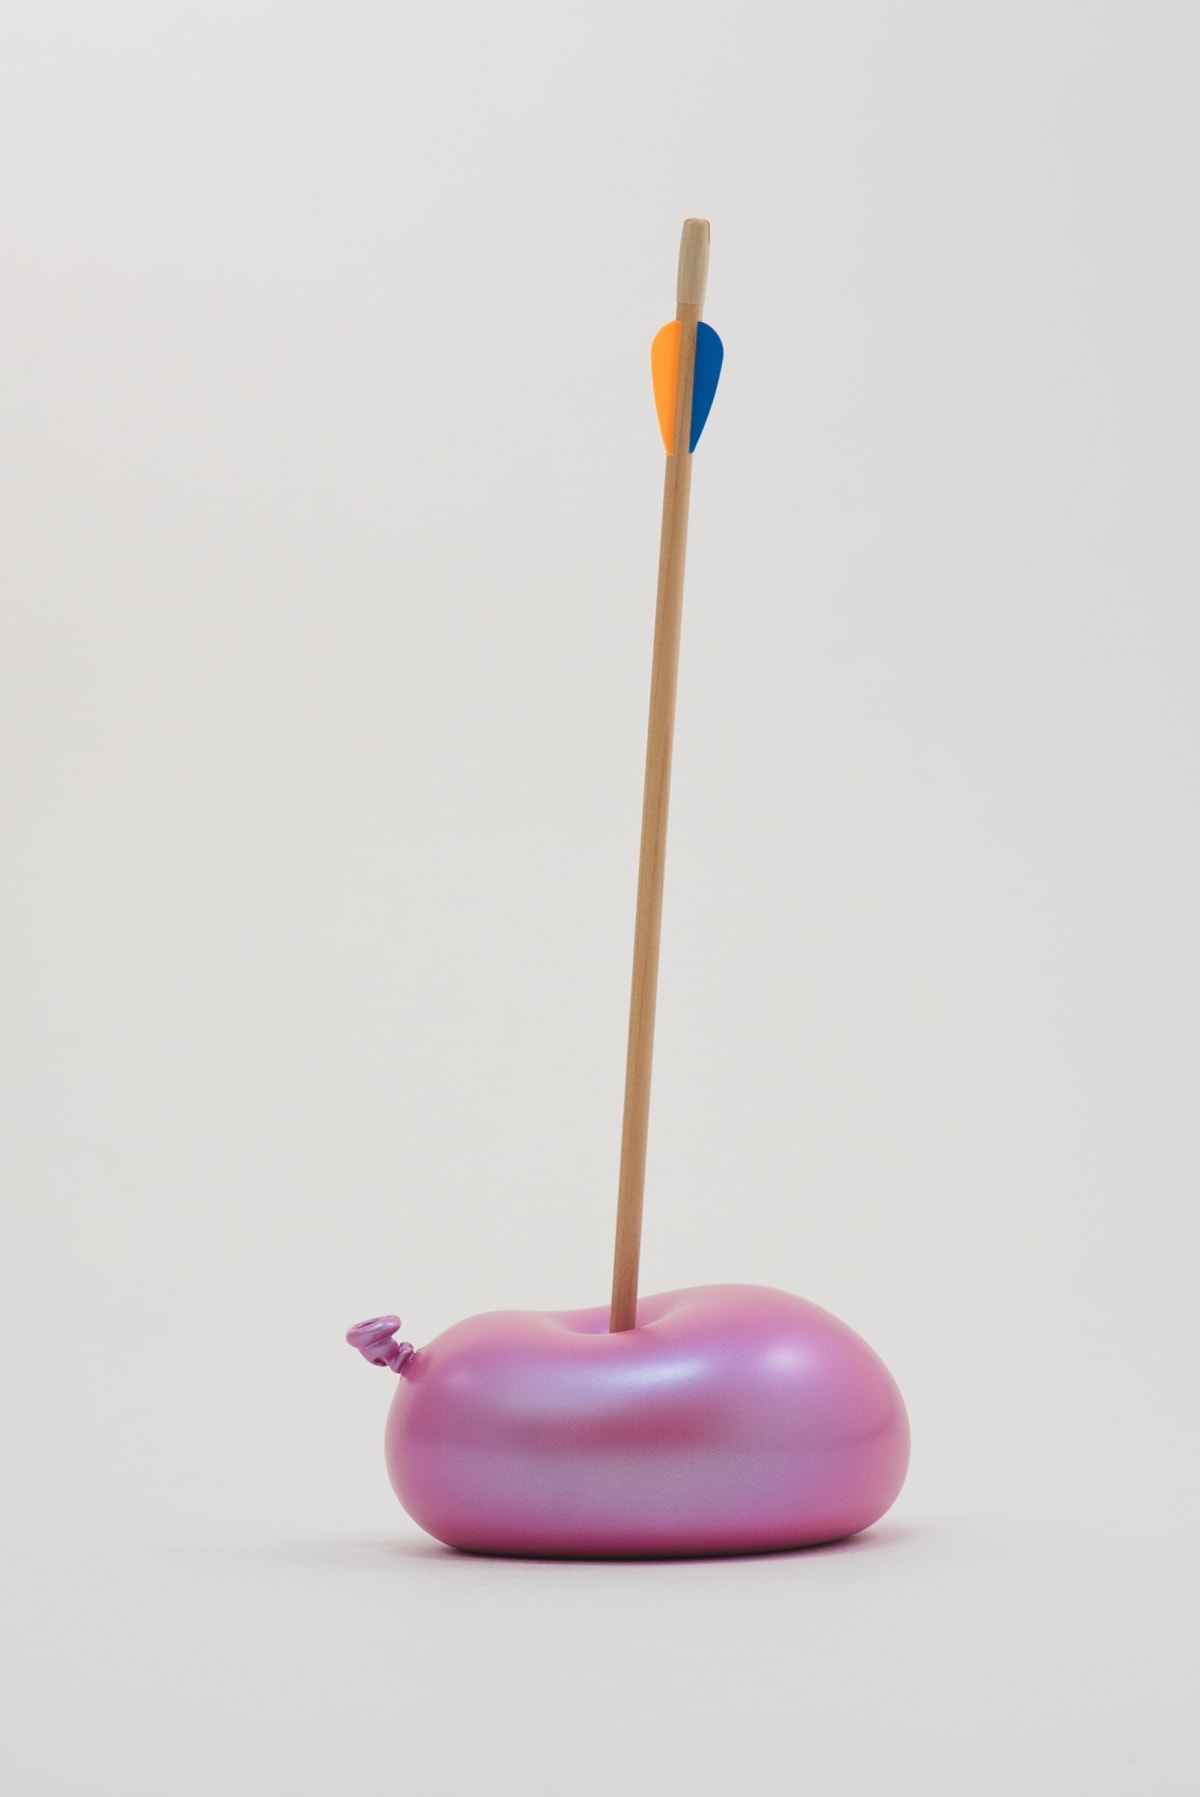 Último Instante. Single arrow balloon. Rosa metalizado., 2023